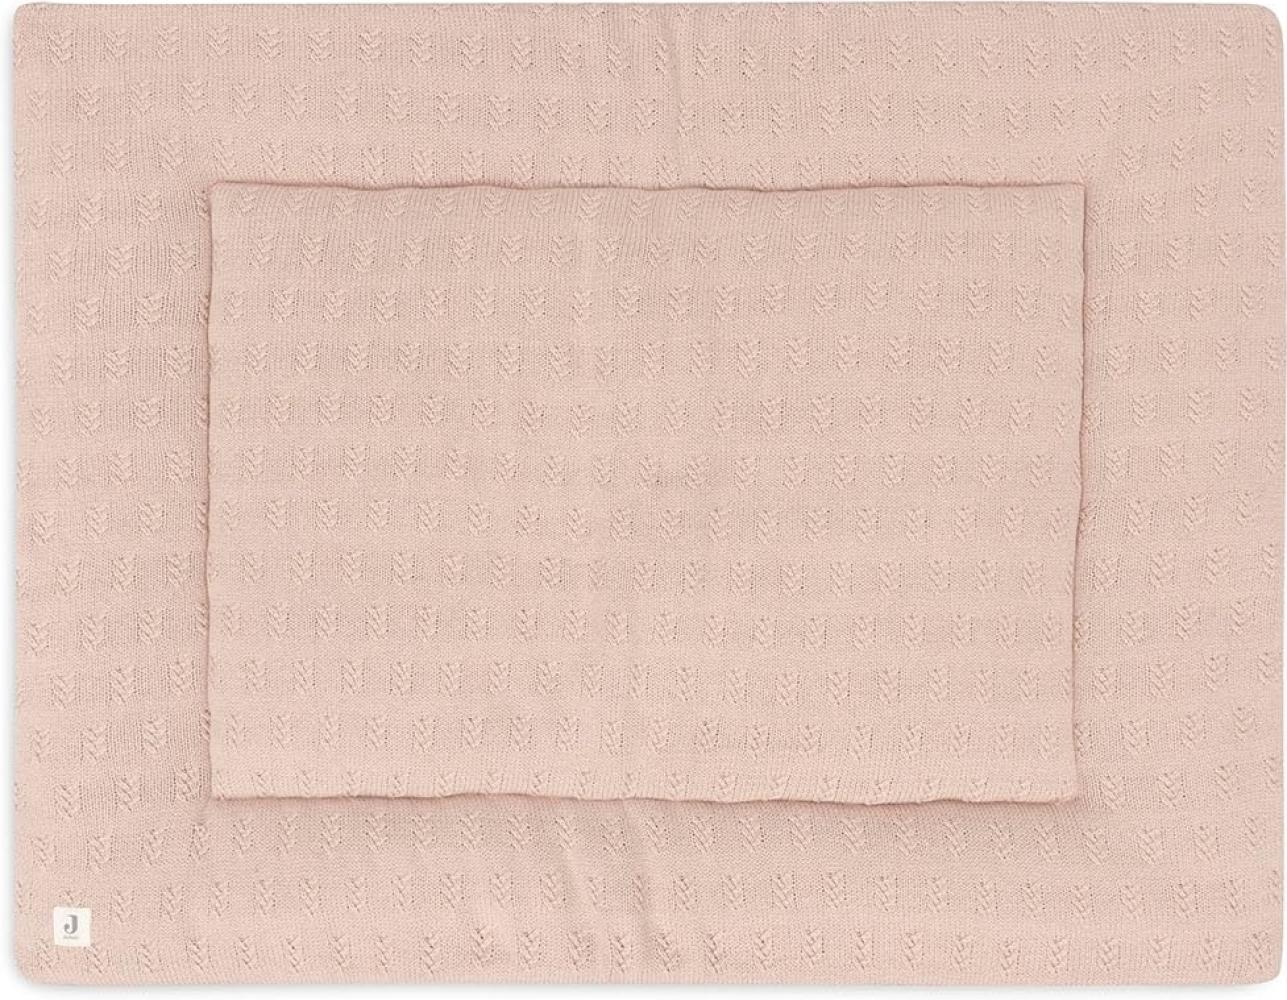 Jollien 017-512-67065 Playpen Insert Crawling Blanket Knitted Grain Knit Pink (75 x 95 cm) Bild 1